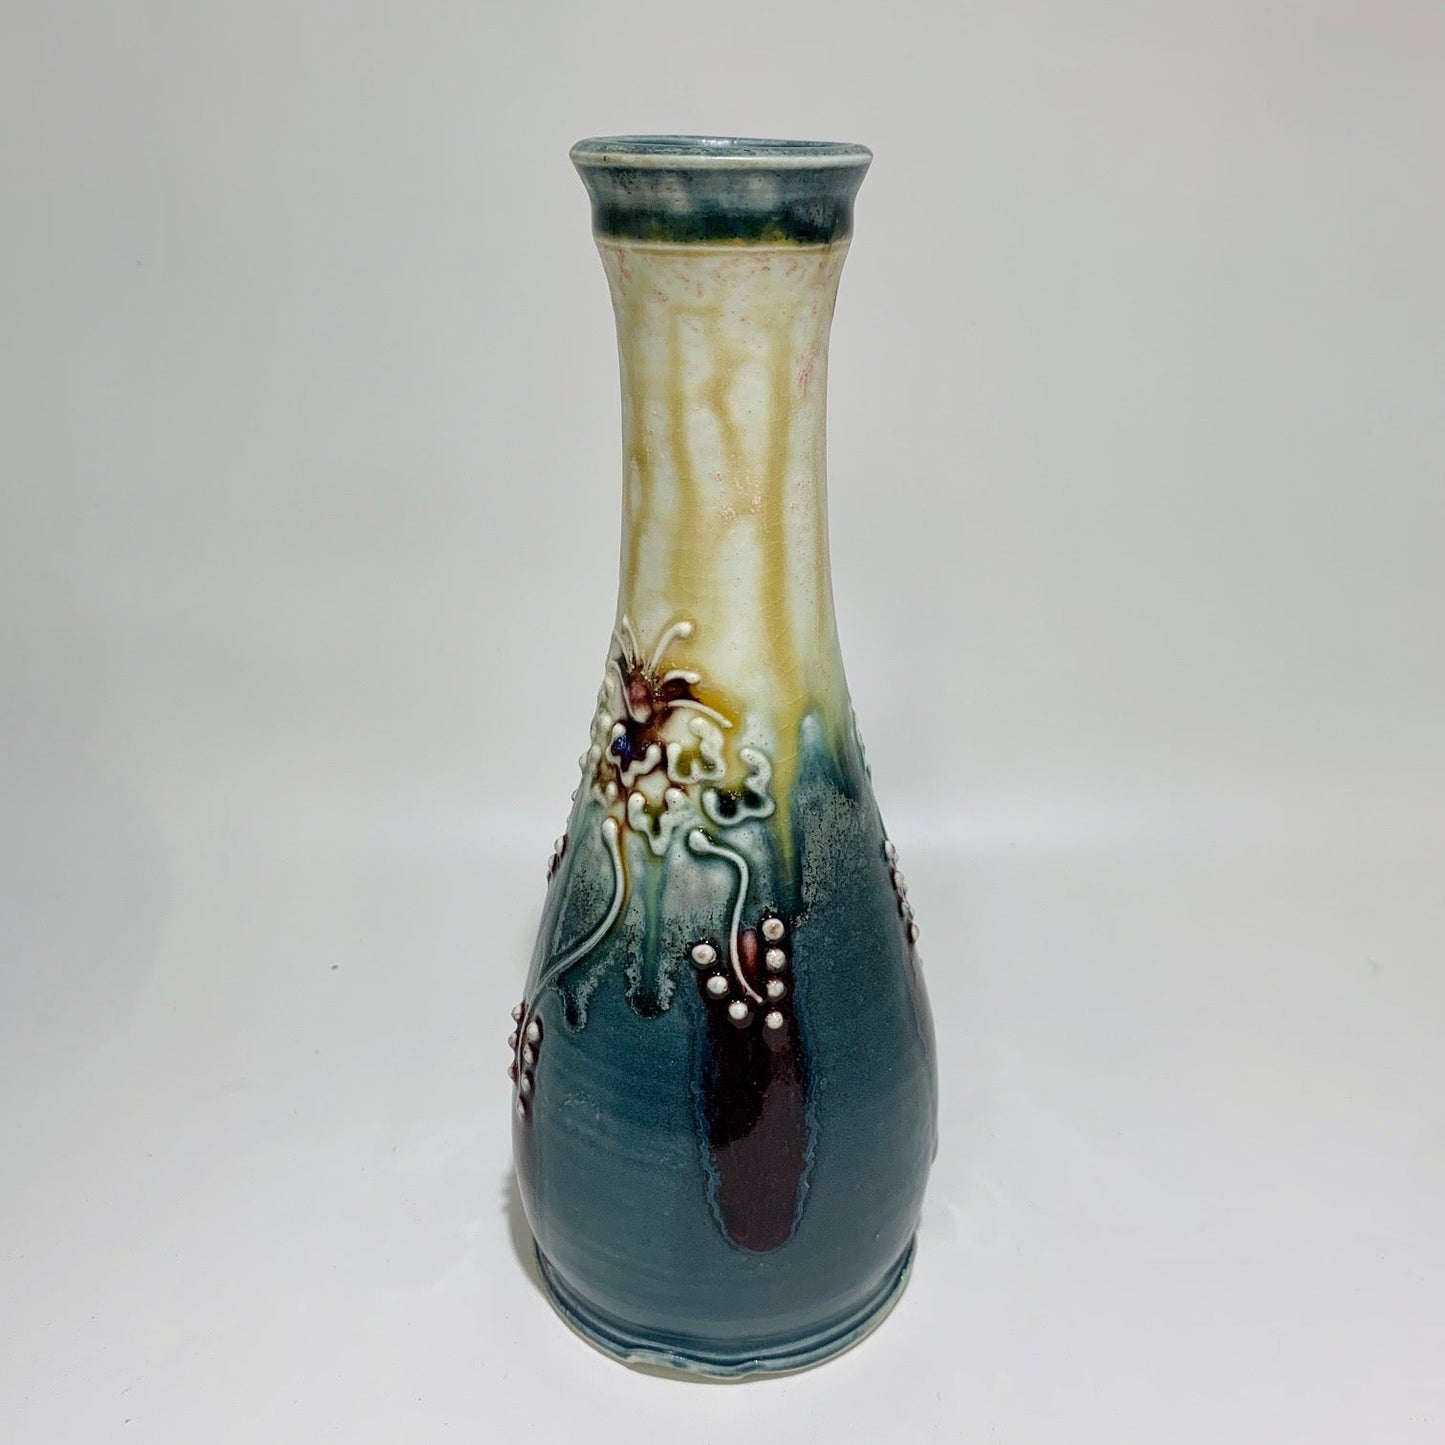 Geoff Lloyd Bud Vase Small? Pottery? Buy Art at Carolina Creations Gallery in Downtown New Bern?